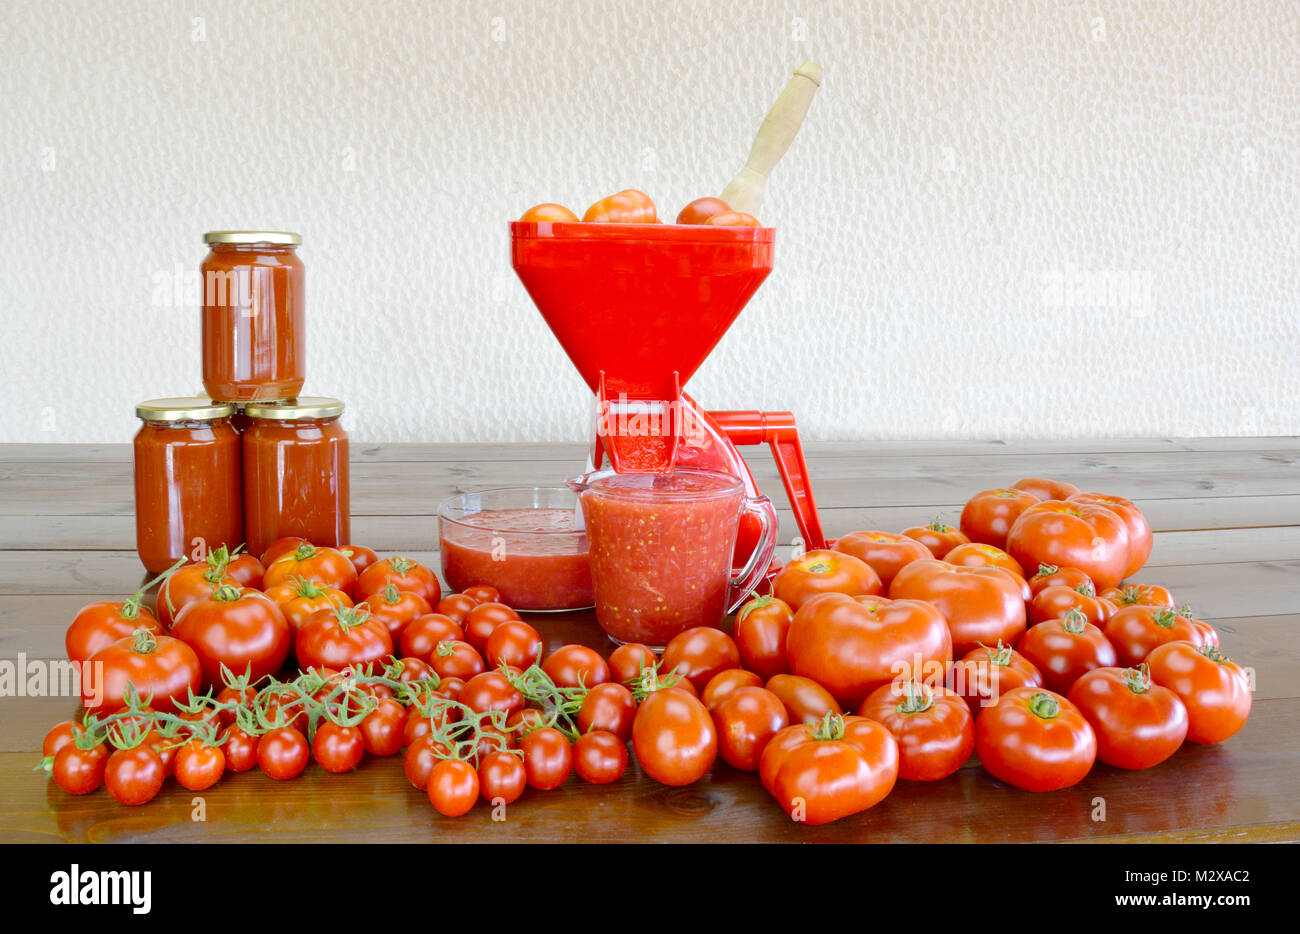 https://c8.alamy.com/comp/M2XAC2/tomato-strainer-fresh-tomatoes-fresh-and-canning-tomato-sauce-and-M2XAC2.jpg